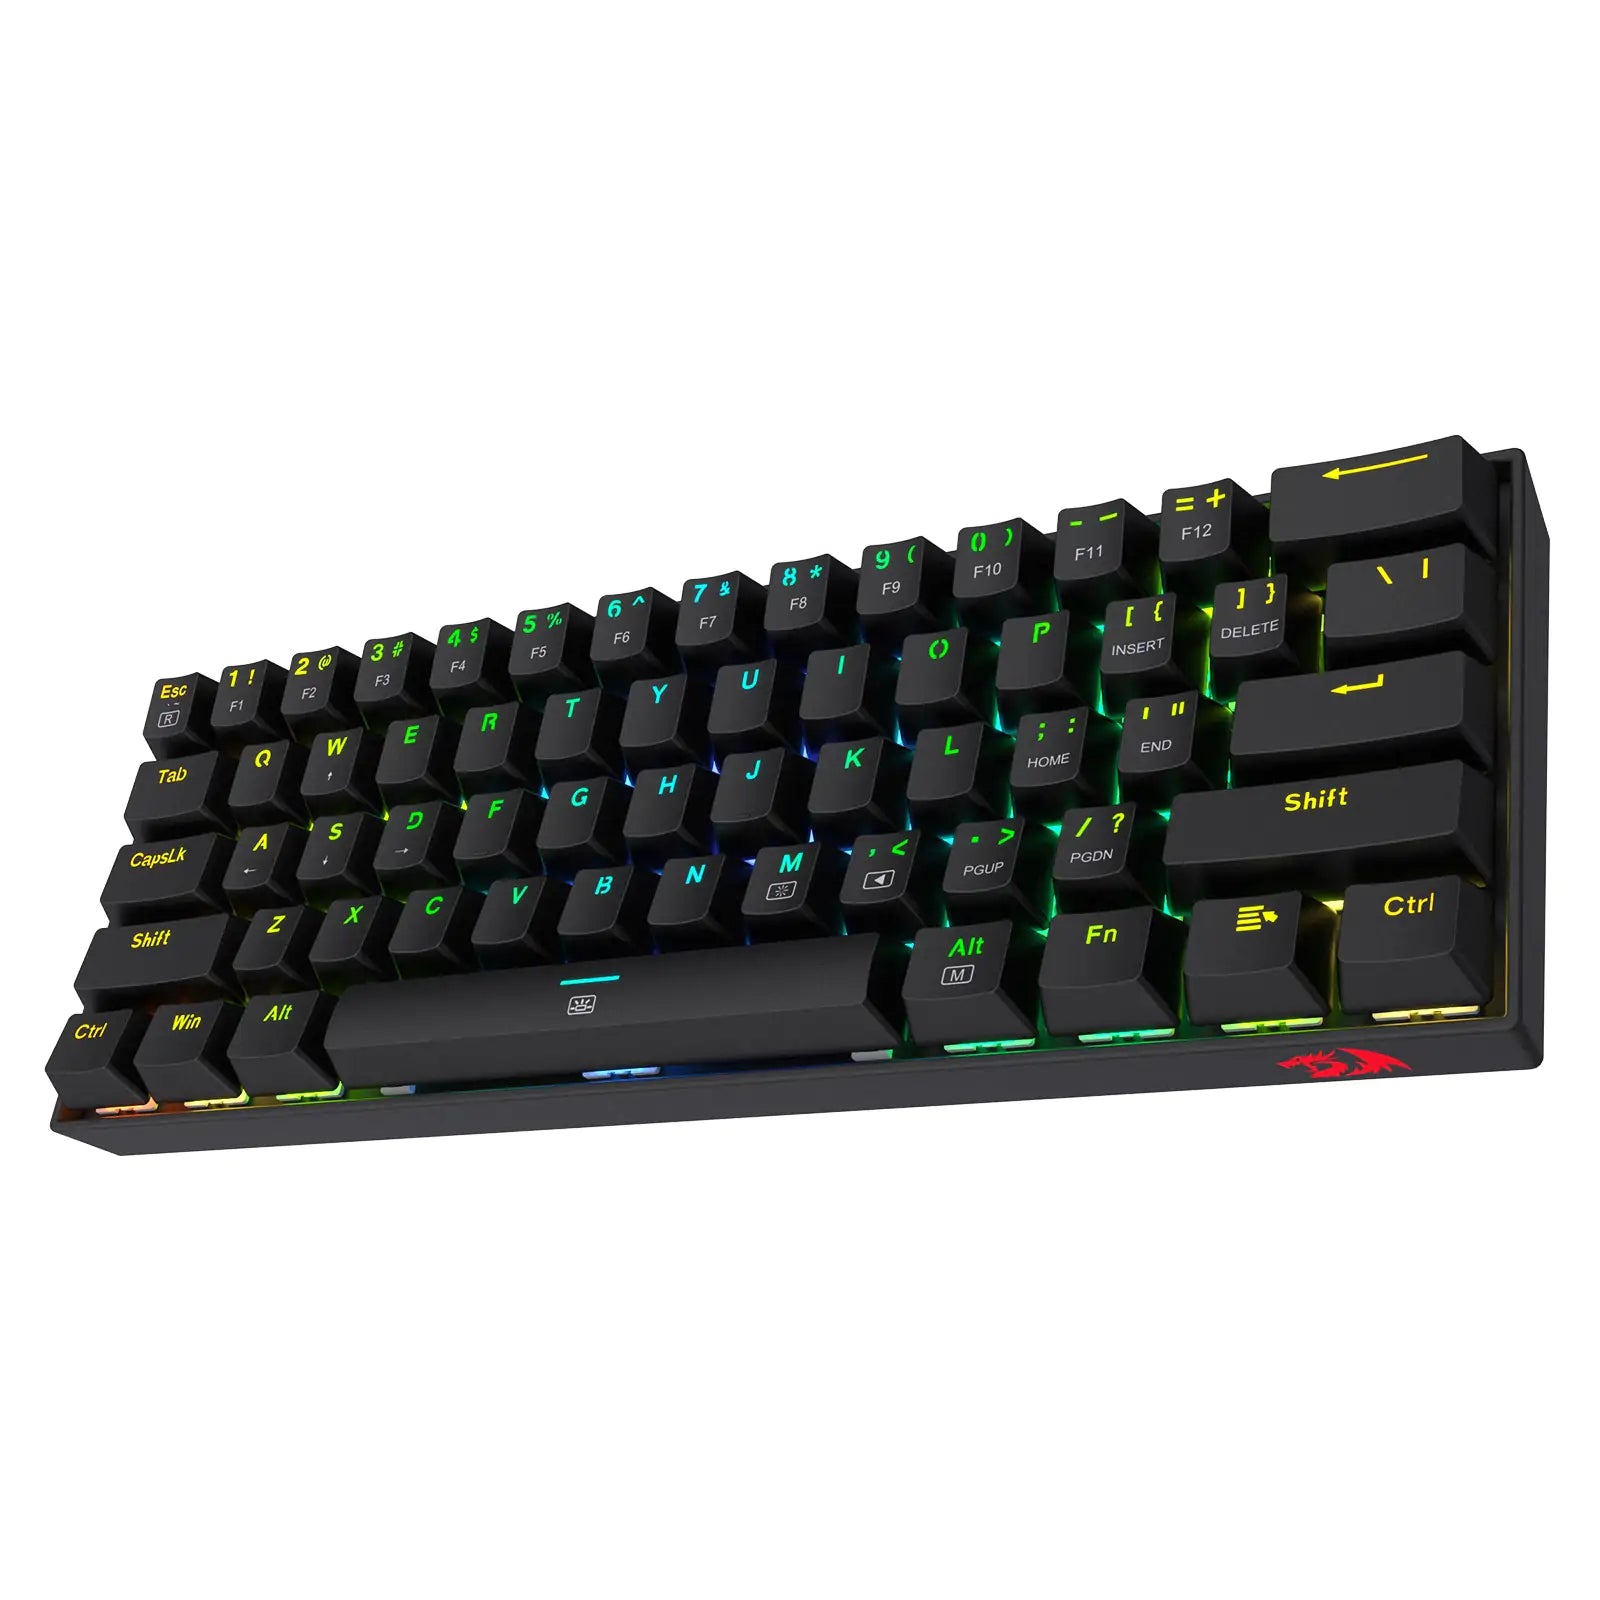 Redragon K630 Dragonborn 60% Wired RGB Gaming Keyboard, Brown Switch, Black